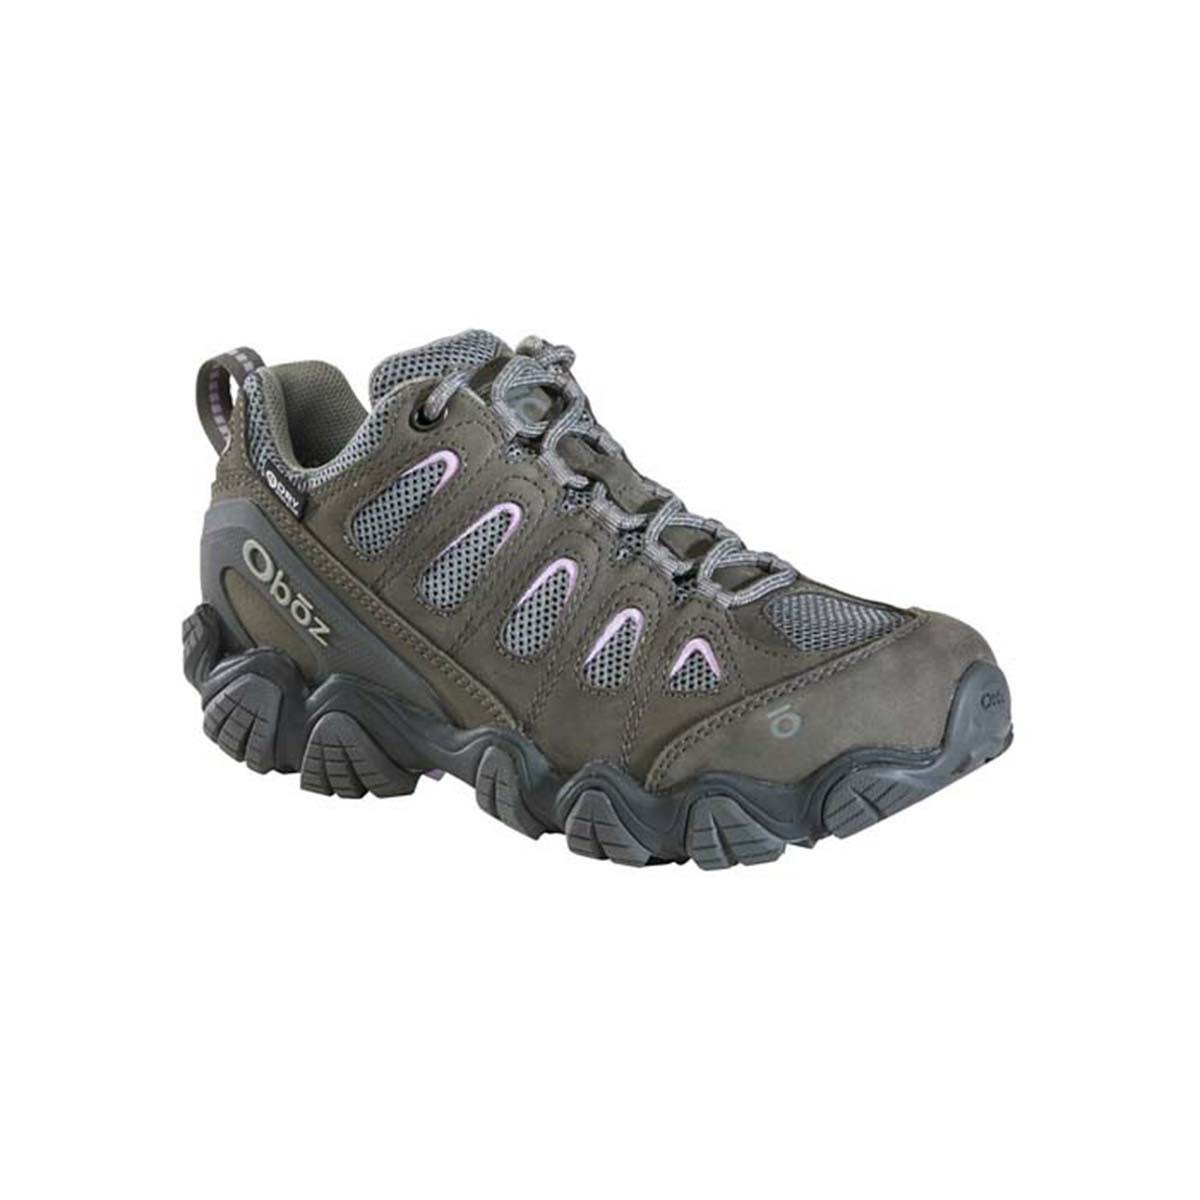 Oboz Hiking Boots Cheap Deals - Sawtooth II Low Waterproof Womens Purple